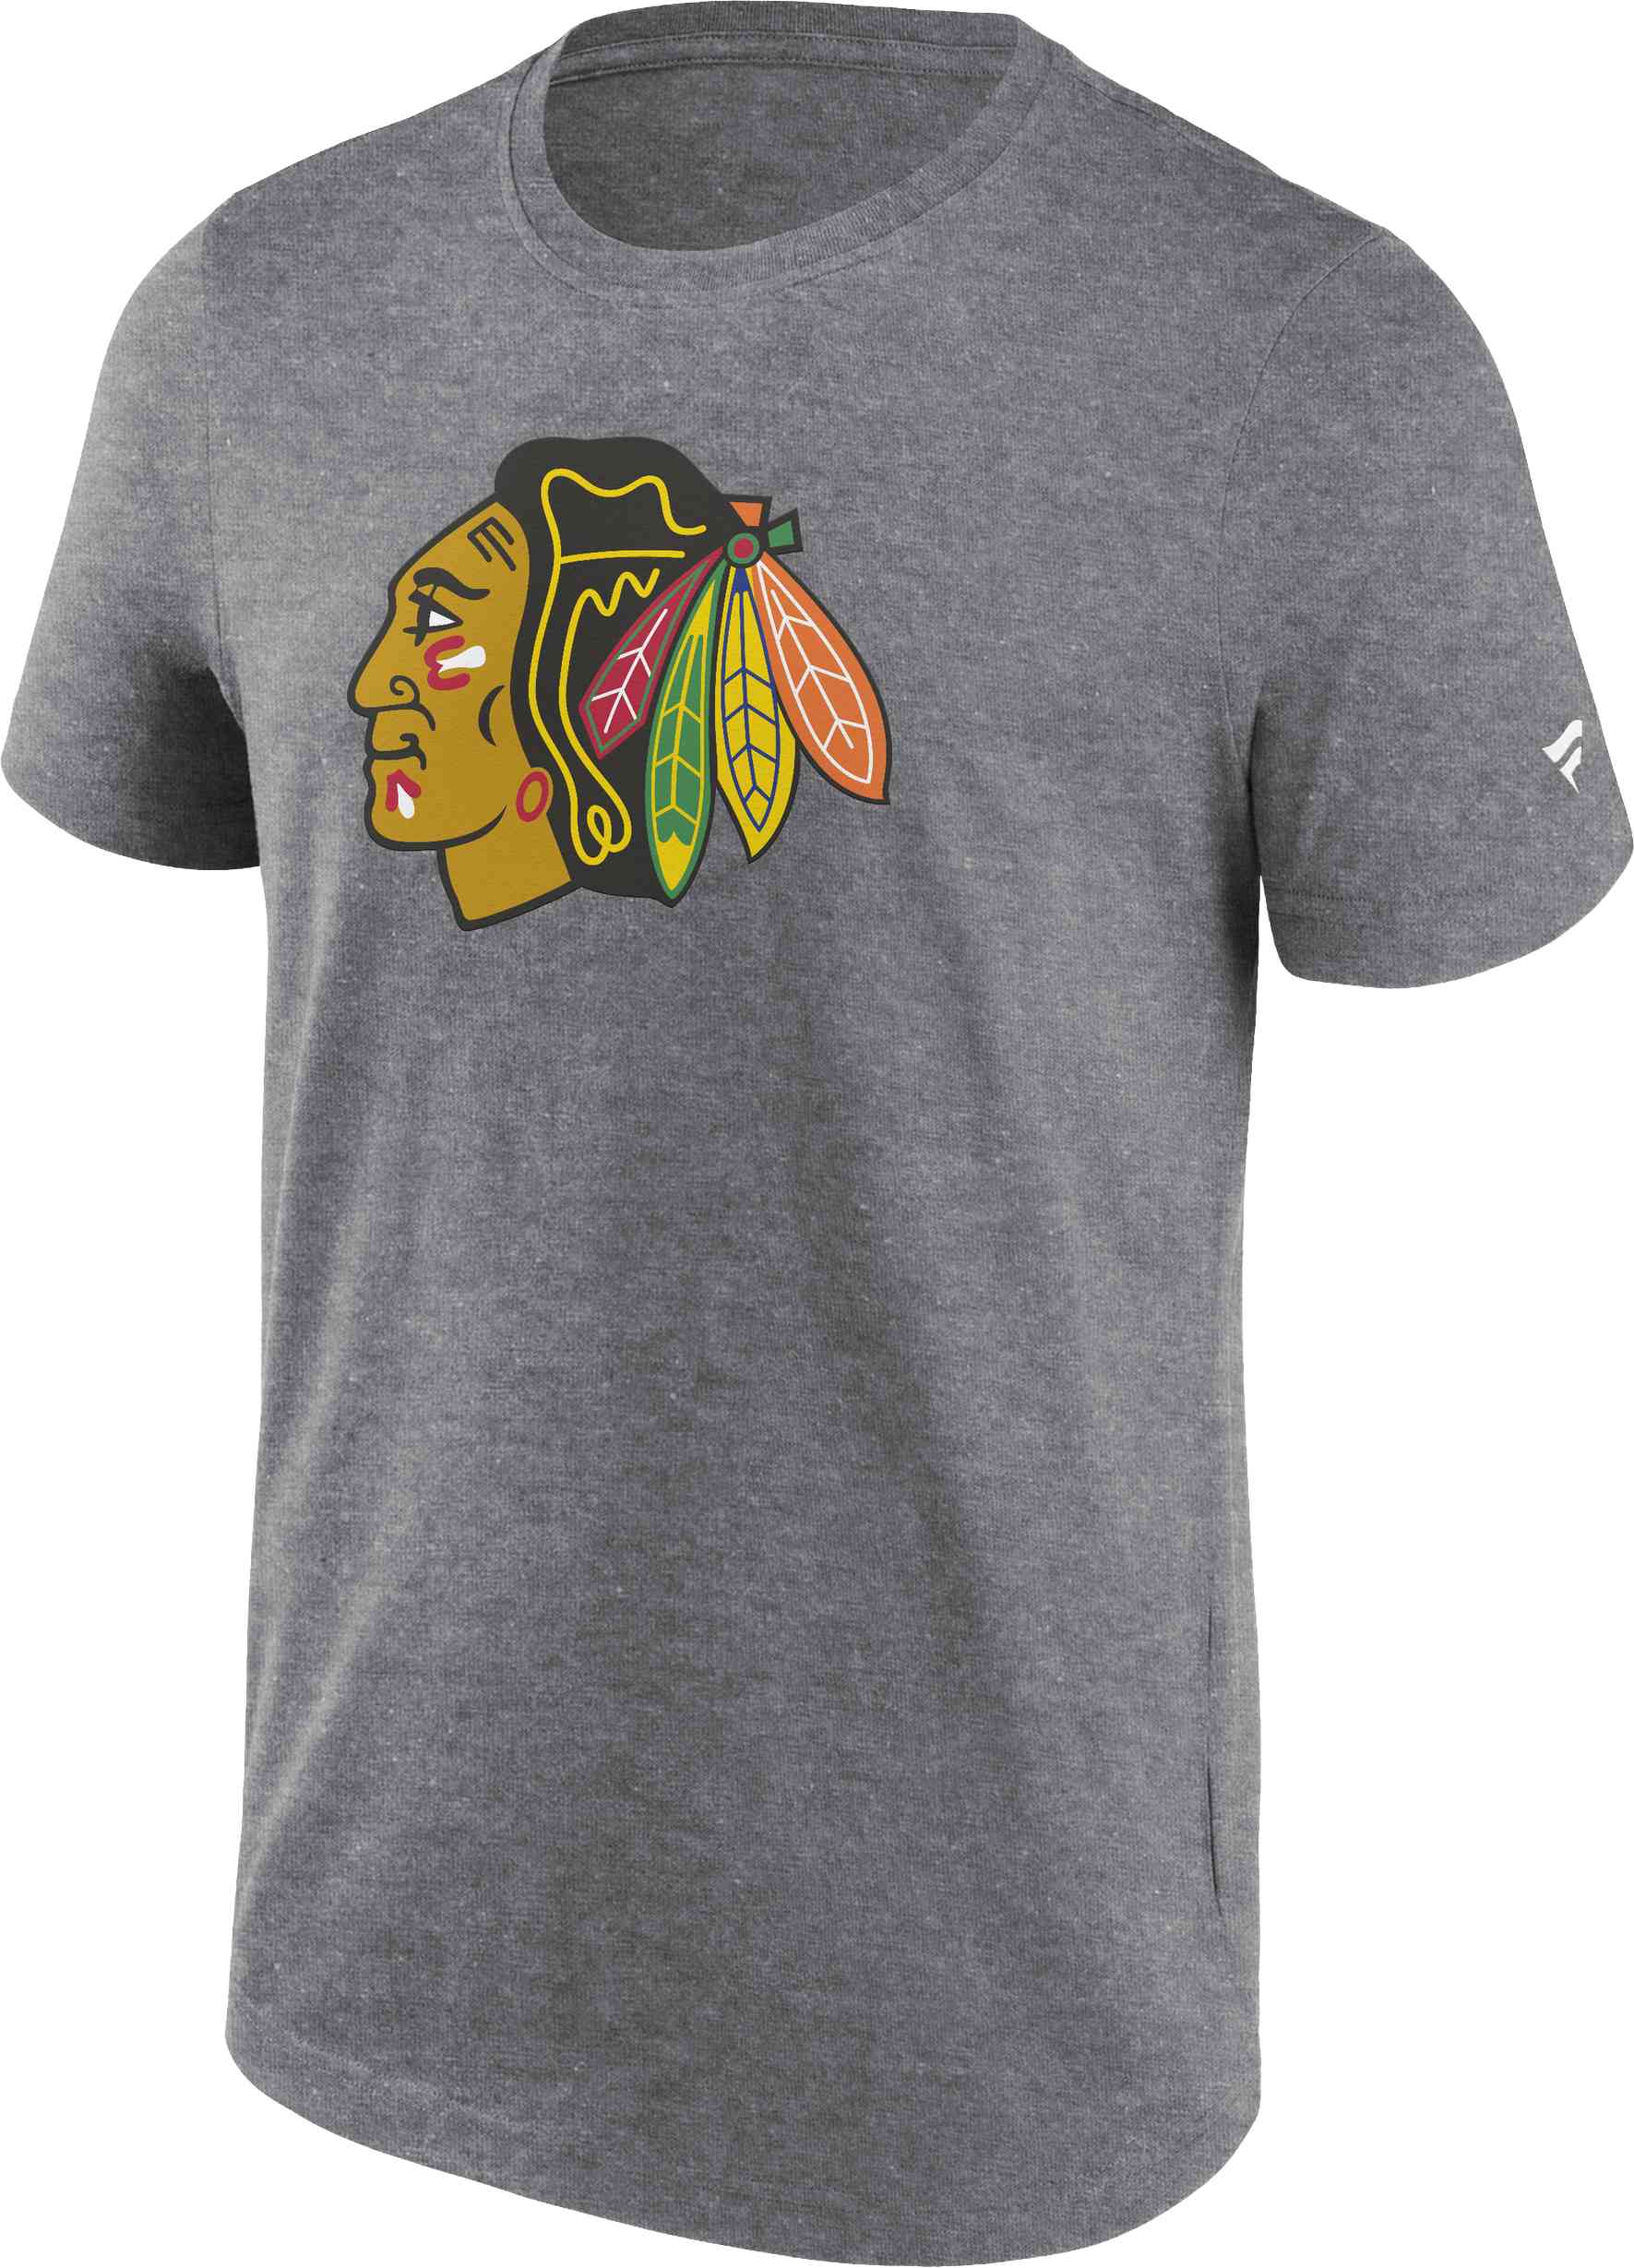 Fanatics - NHL Chicago Blackhawks Primary Logo Graphic T-Shirt